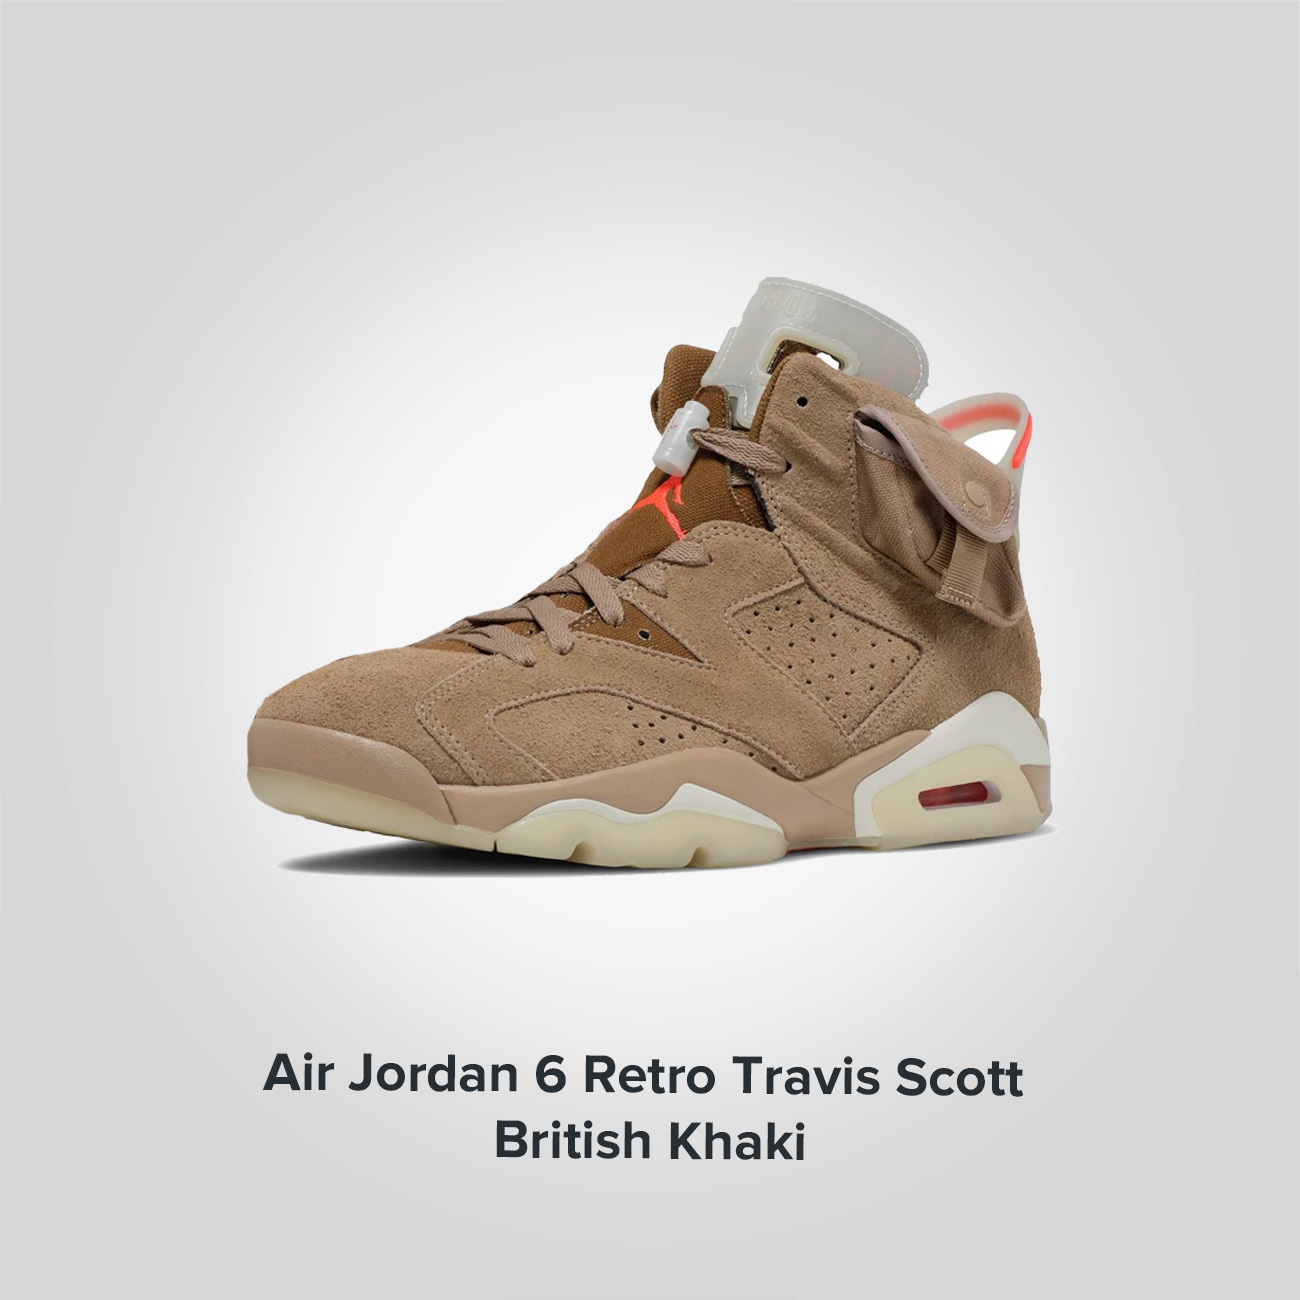 Jordan 6 Retro Travis Scott British Khaki